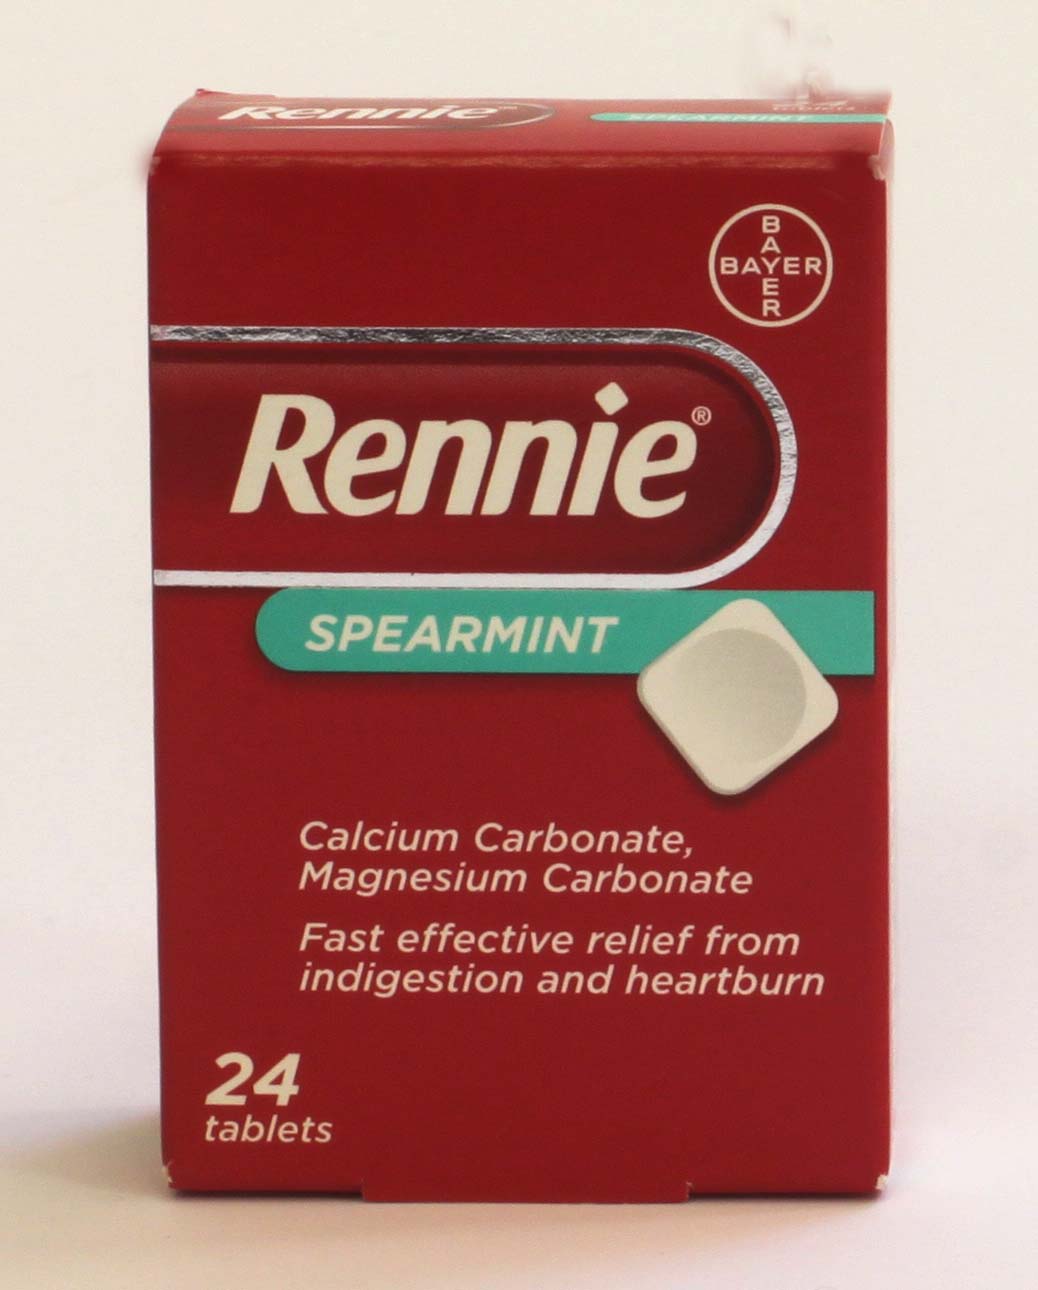 Rennie Spearmint - 24 tablets